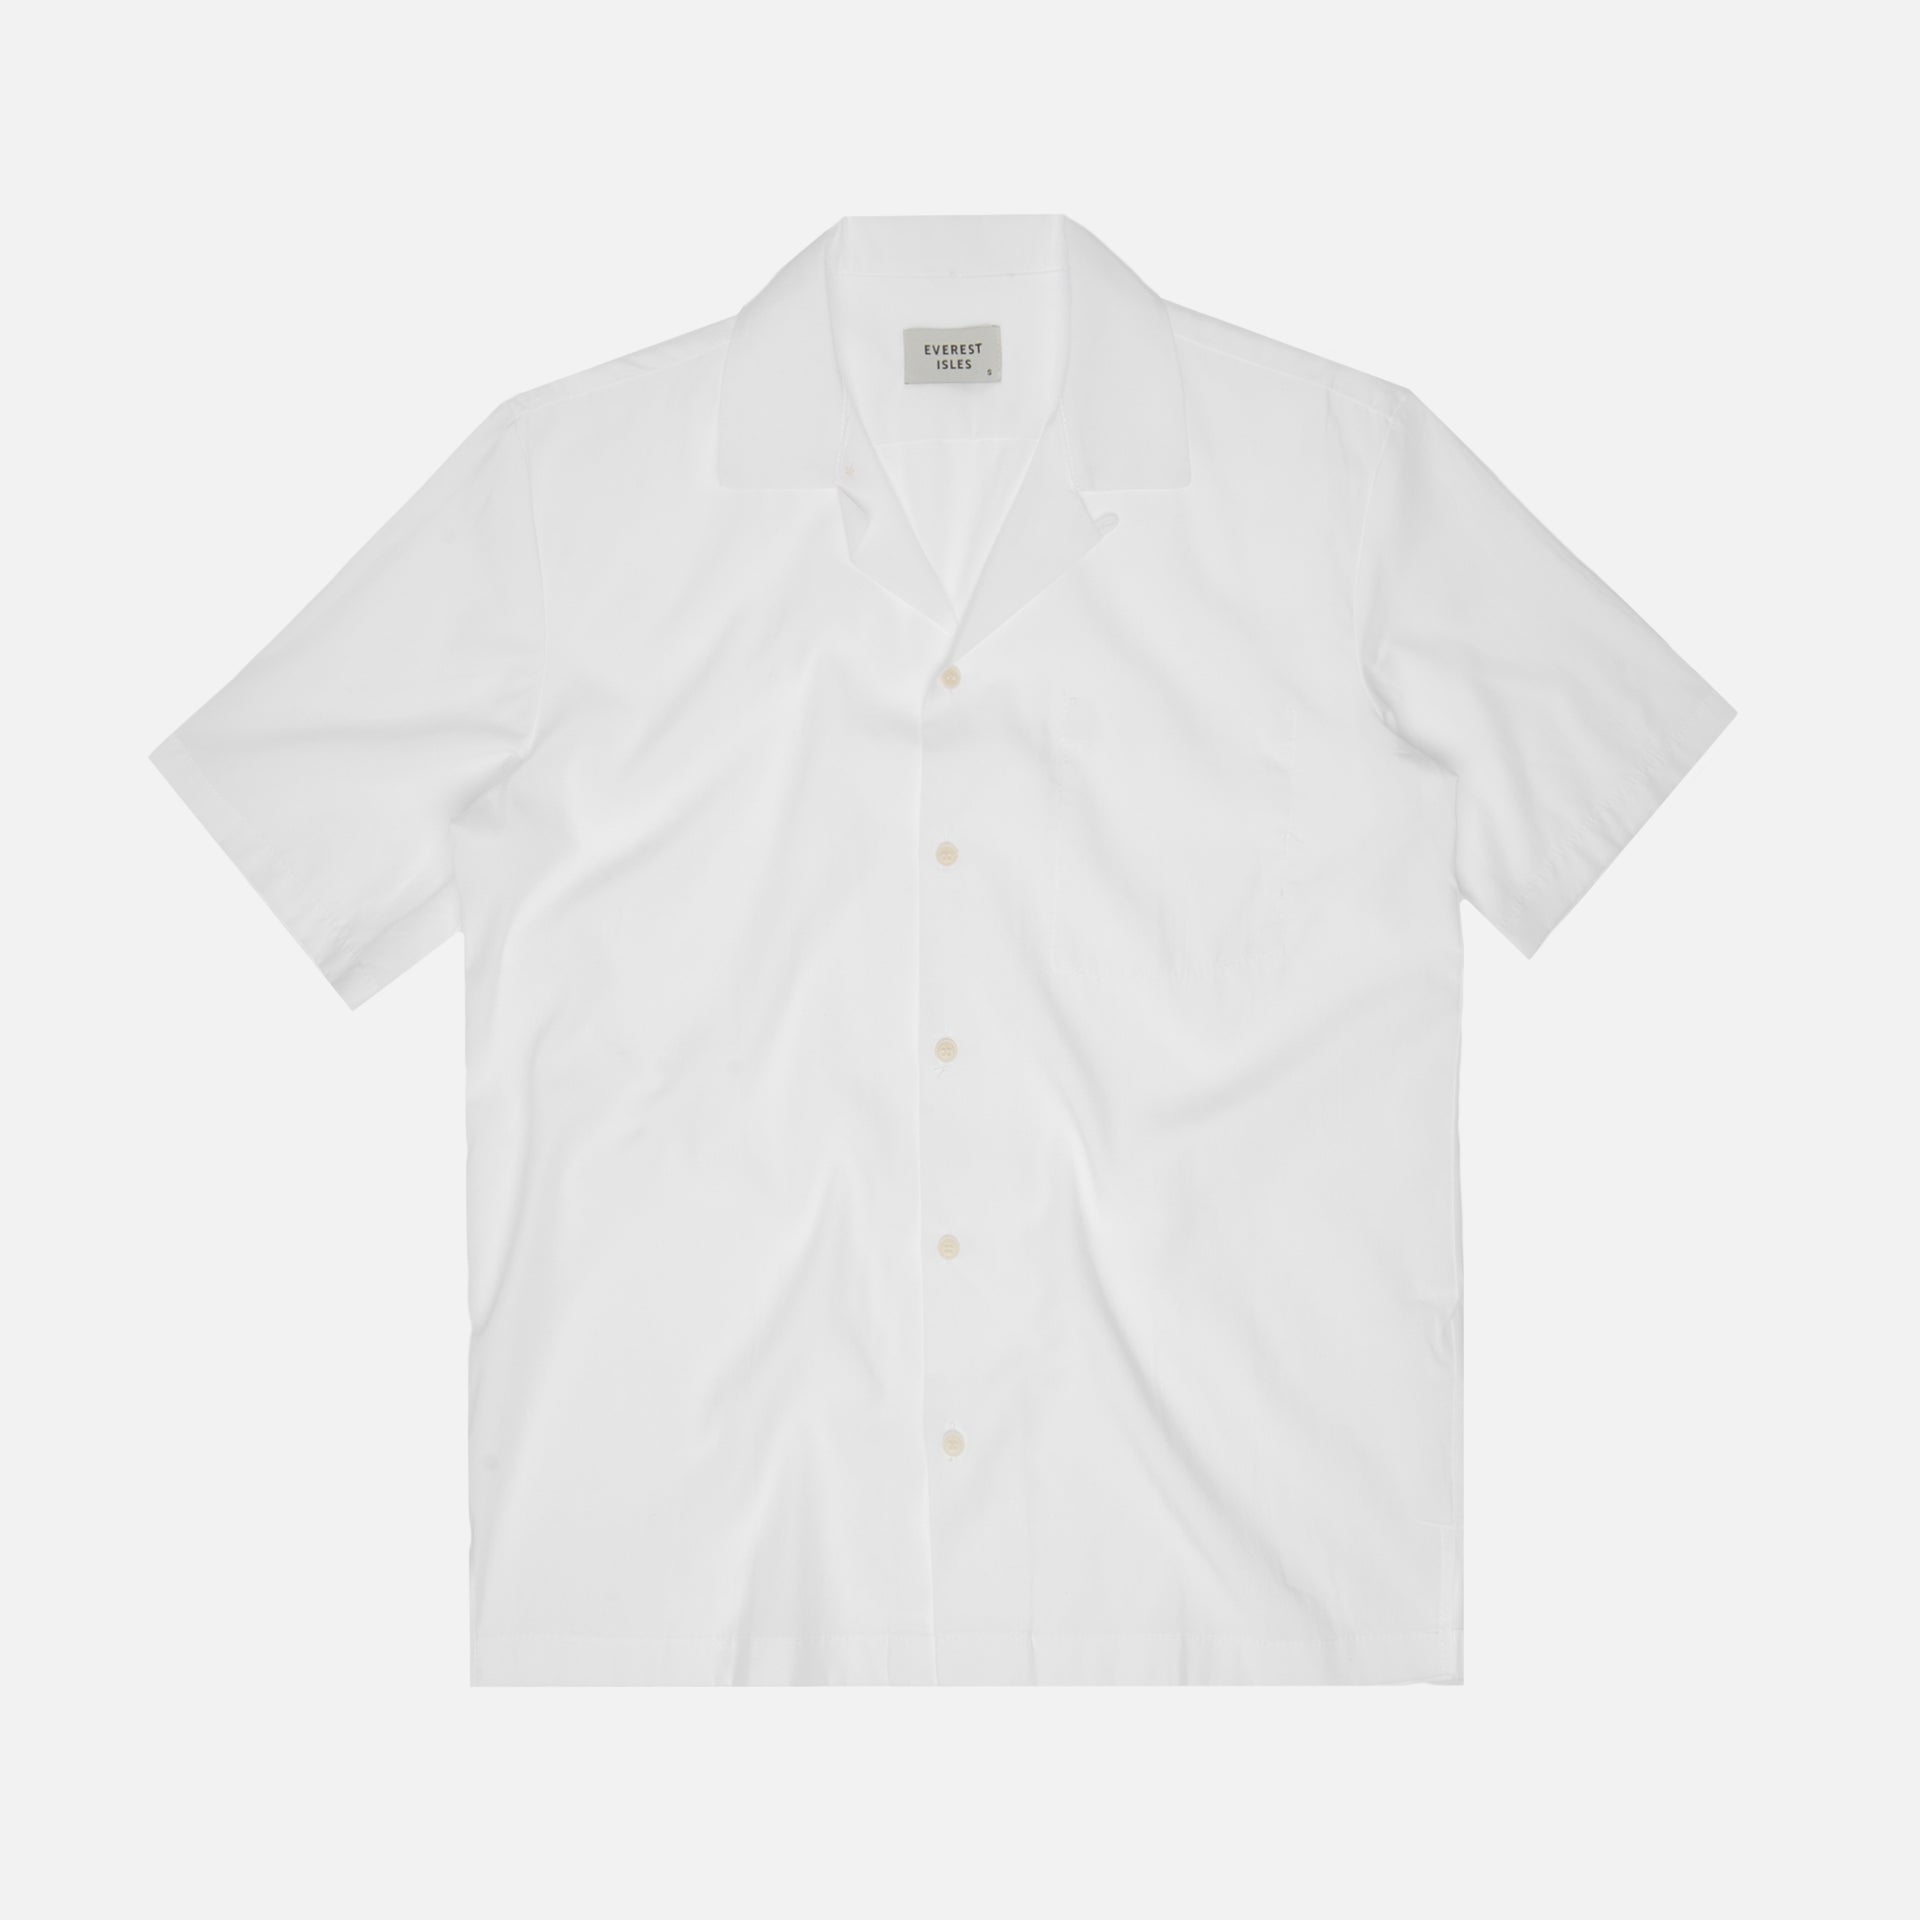 Everest Isles Beach Shirt - White